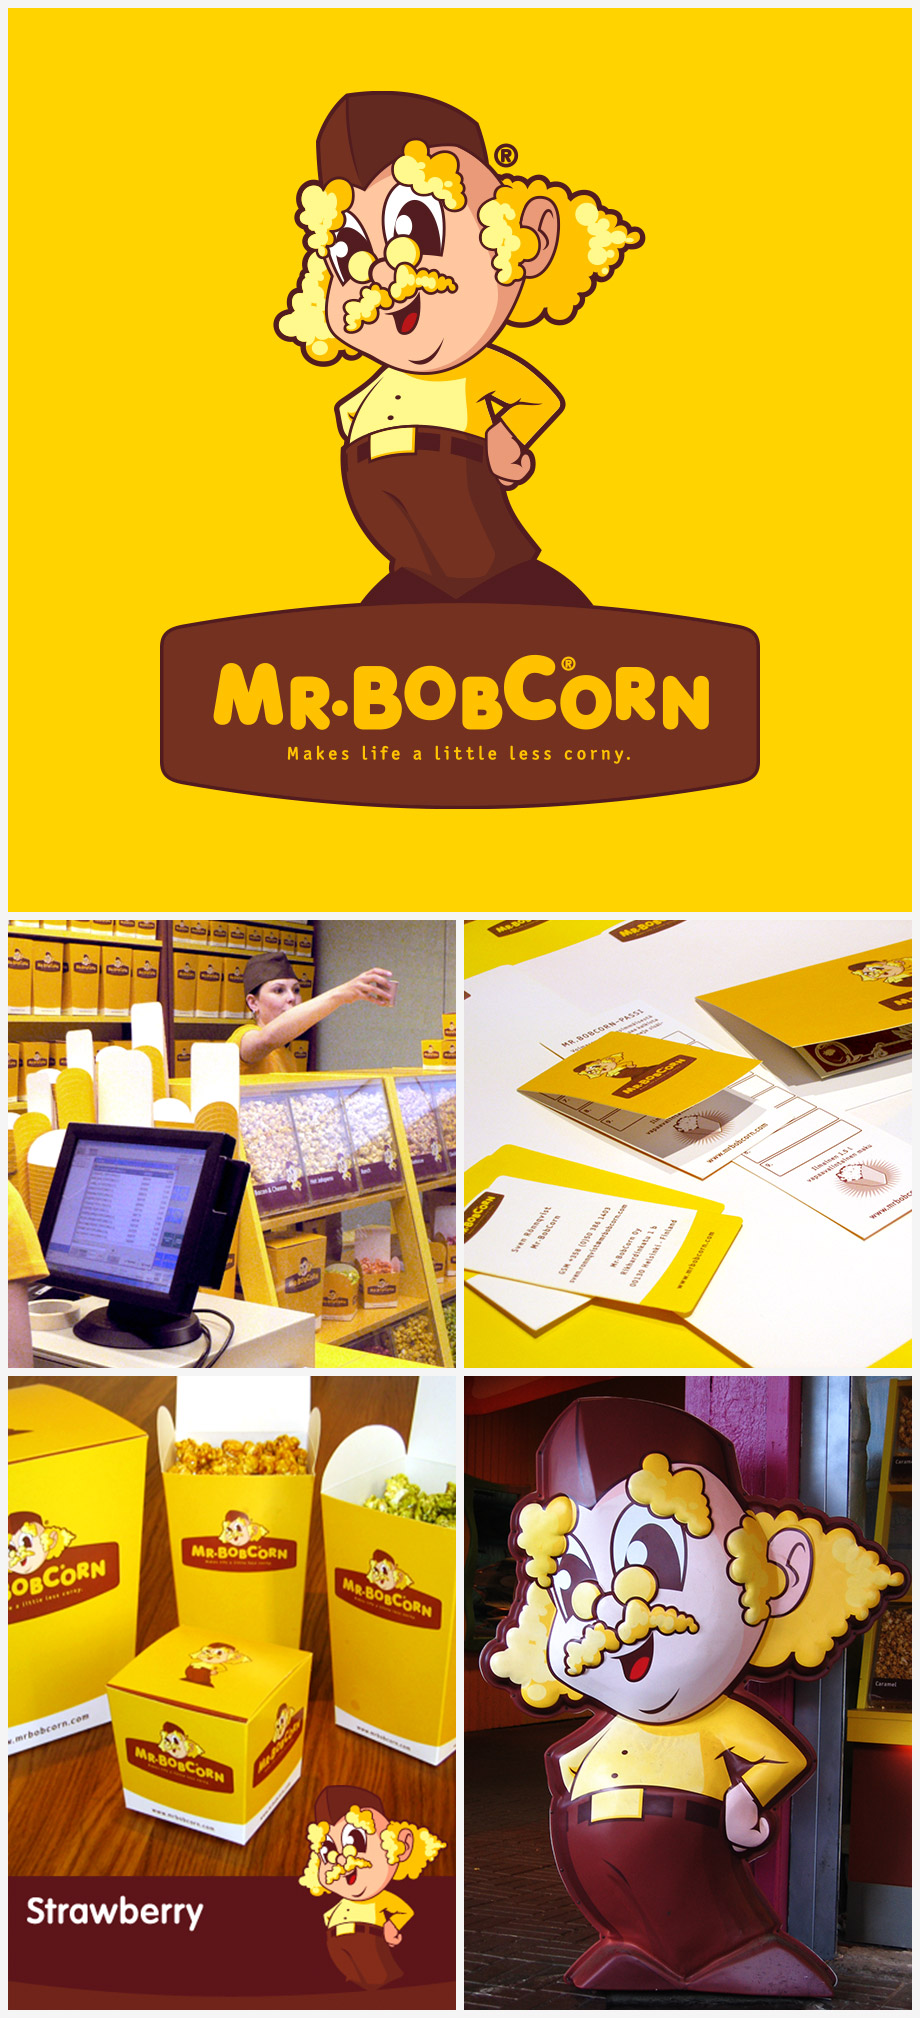 Visual identity for a popcorn brand